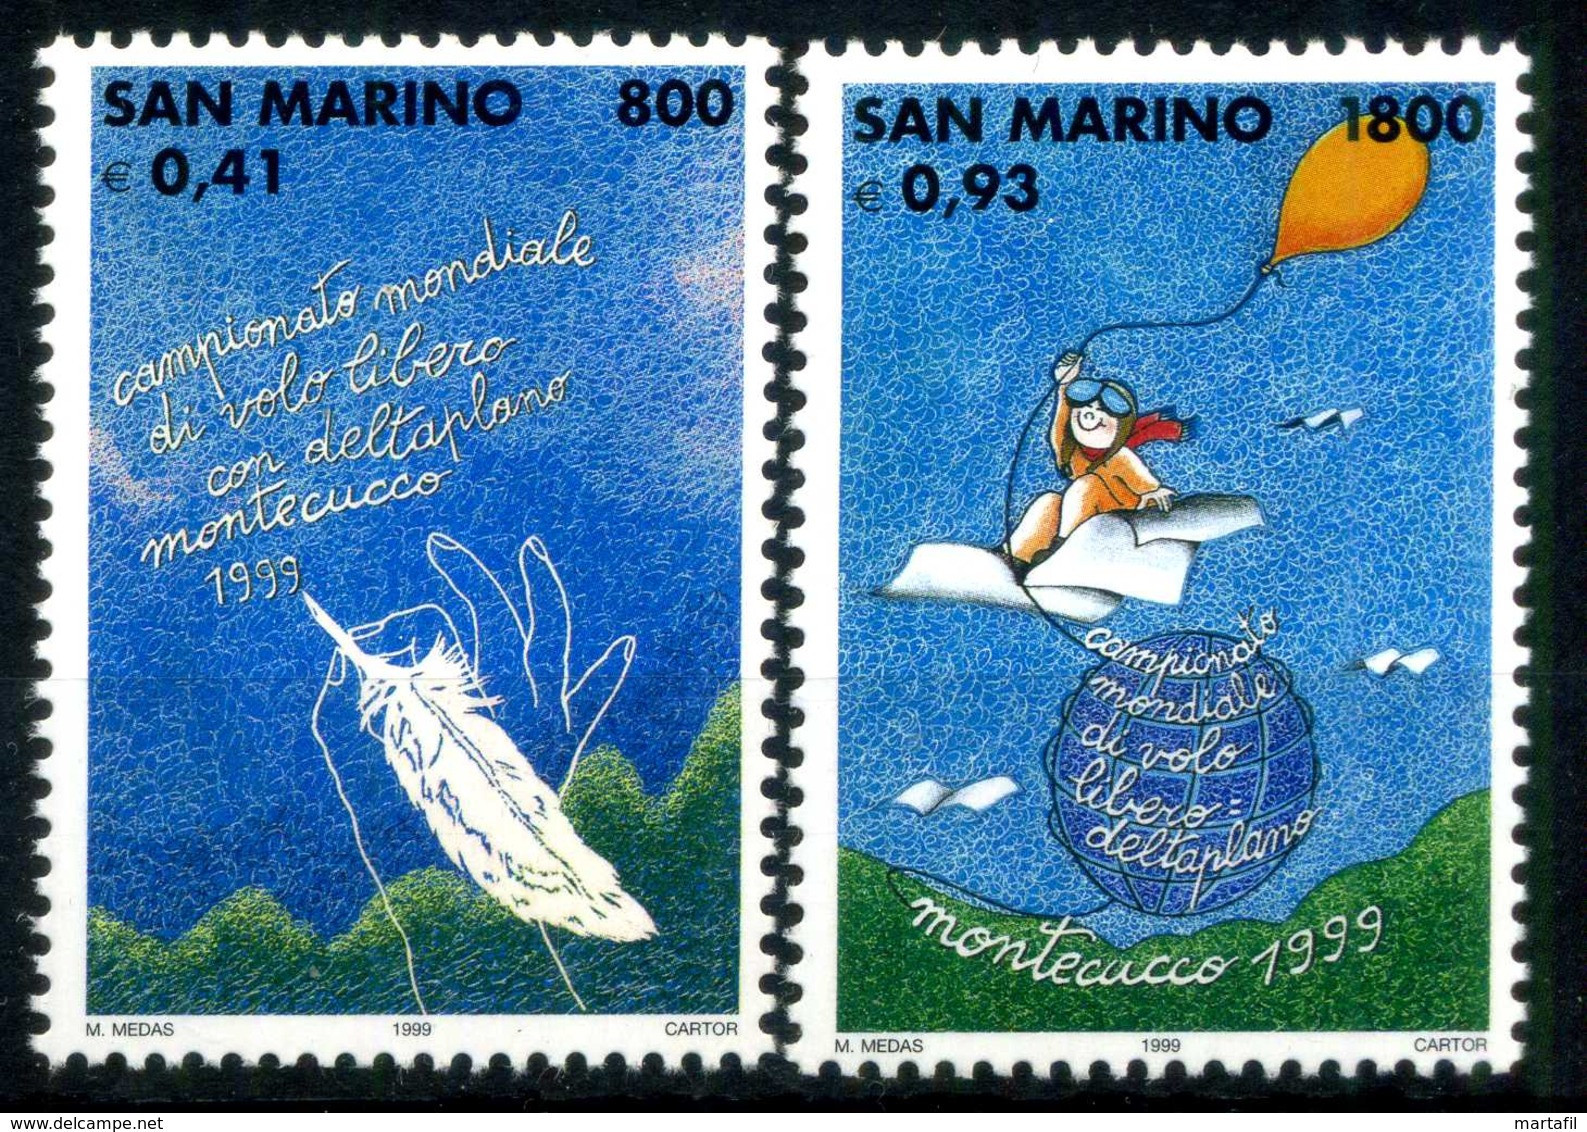 1999 SAN MARINO SET MNH ** - Unused Stamps